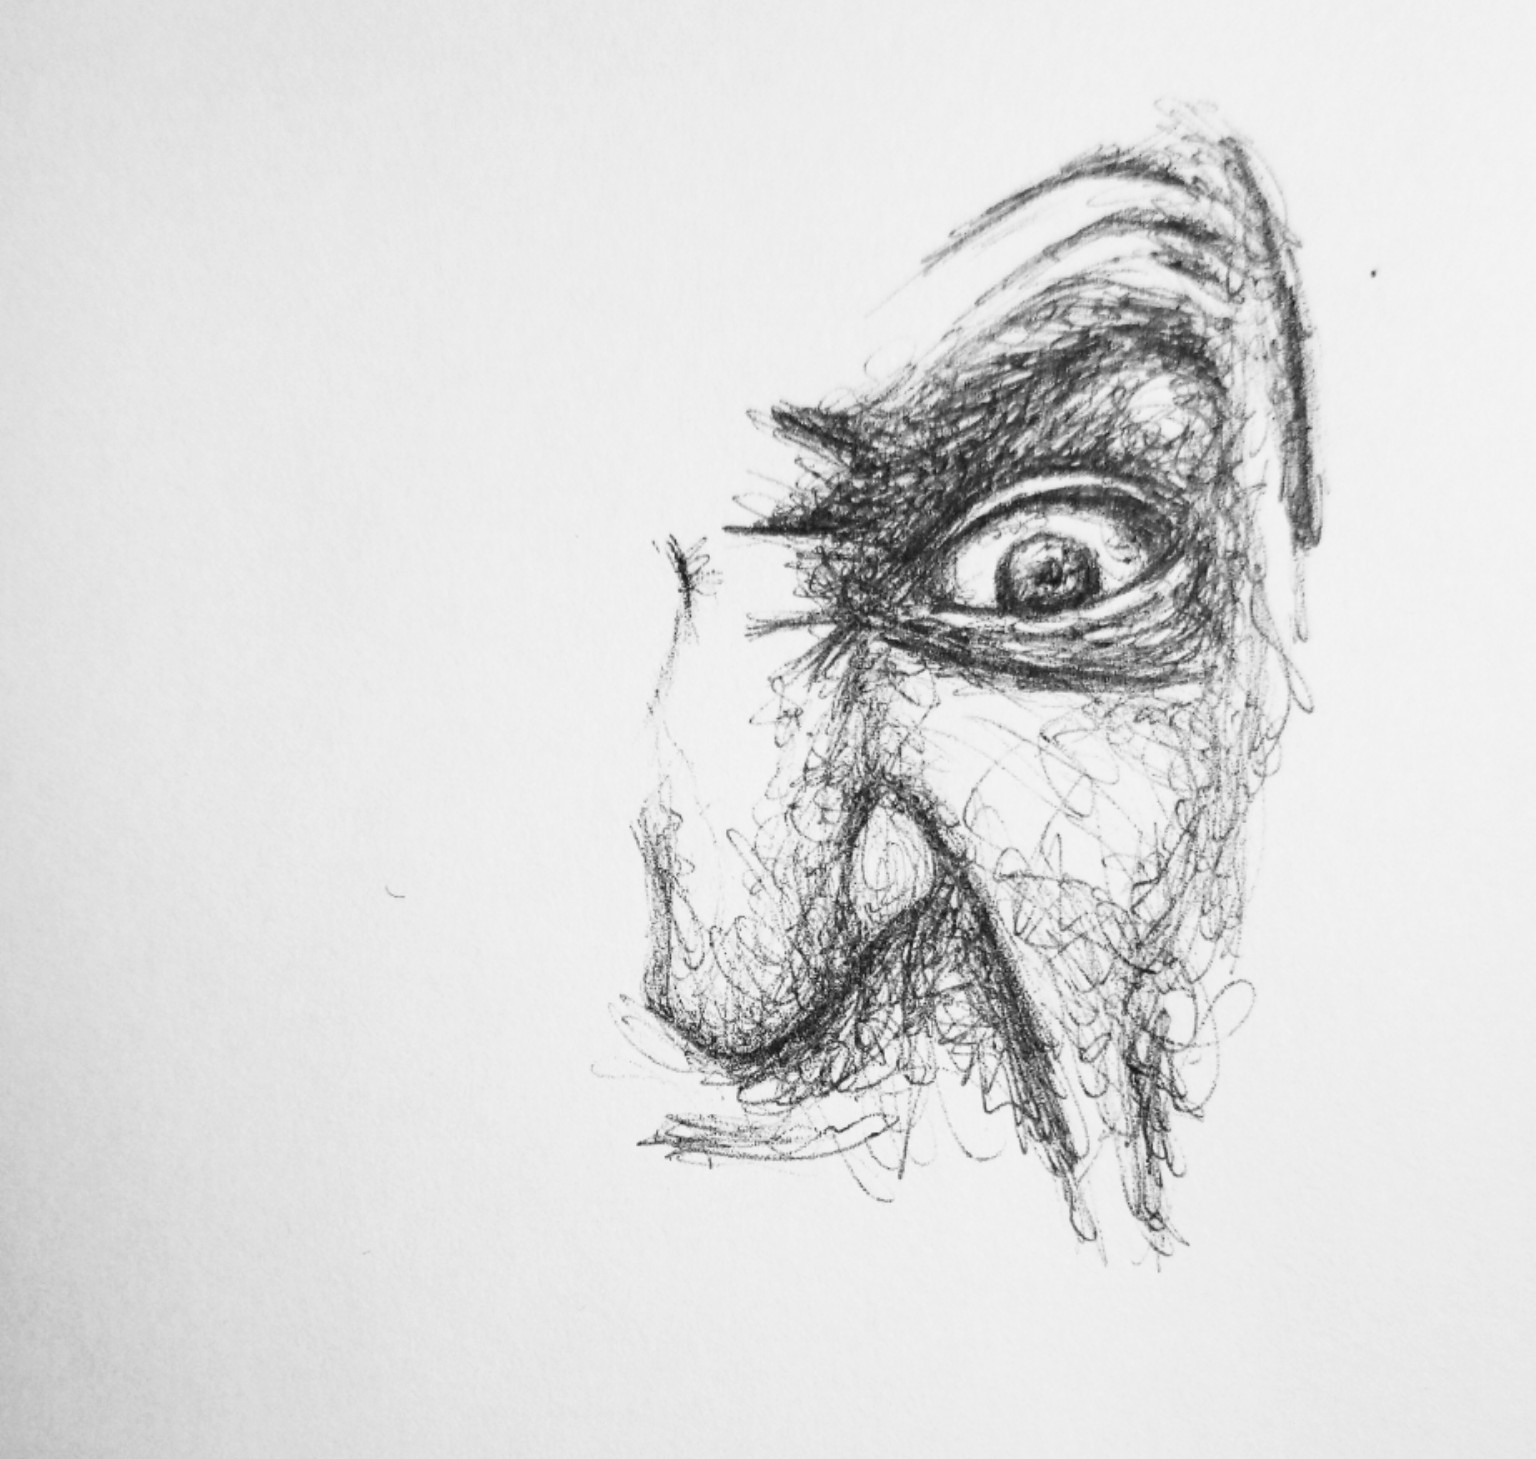 Grumpy Face original pencil drawing